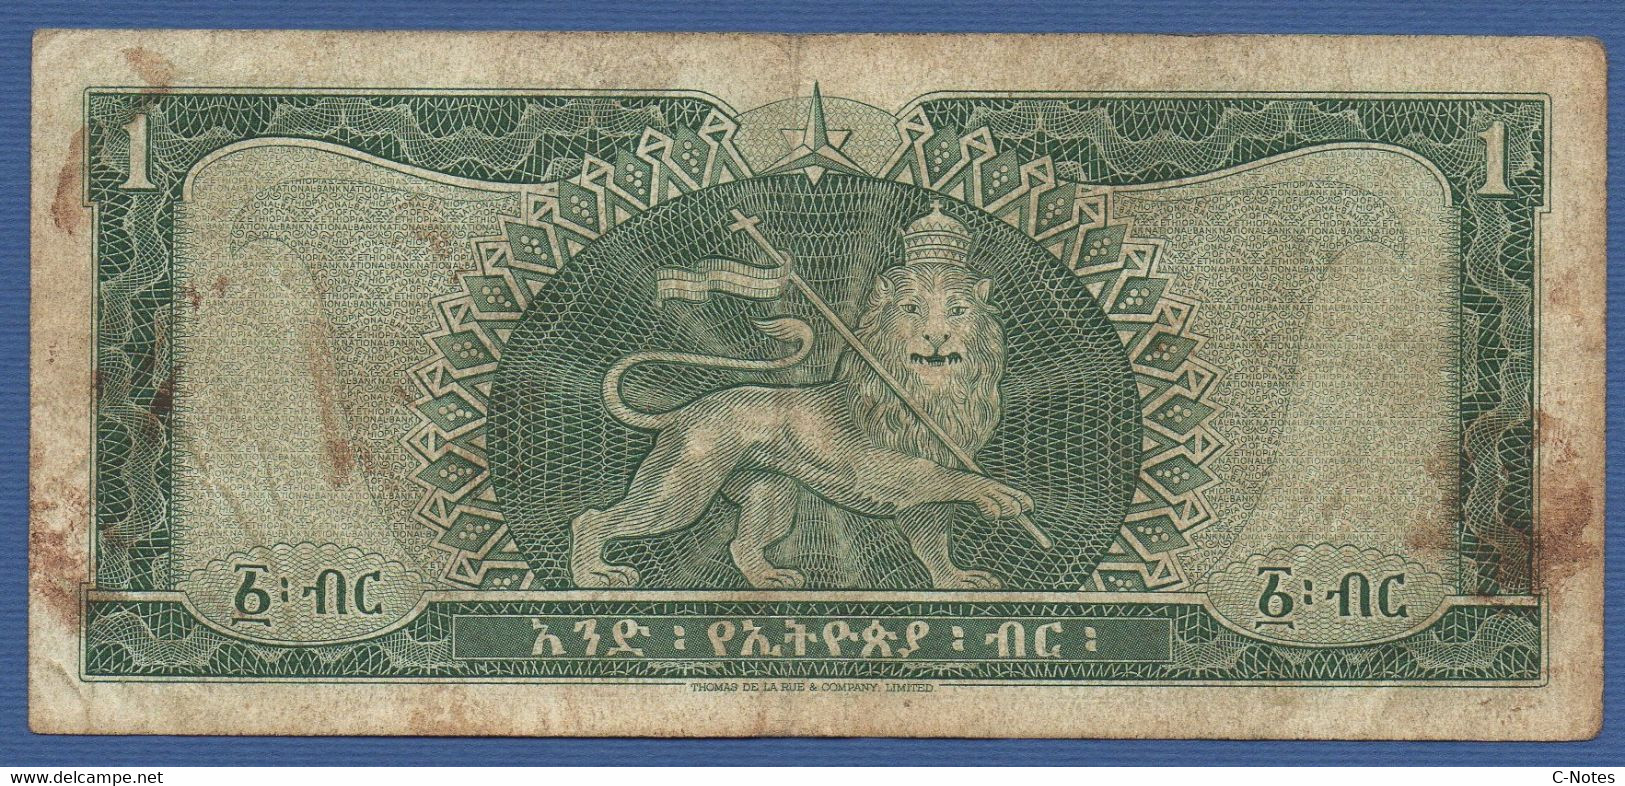 ETHIOPIA - P.25a – 1 Ethiopian Dollar ND (1966) Circulated Serie CV 738773 - Etiopía